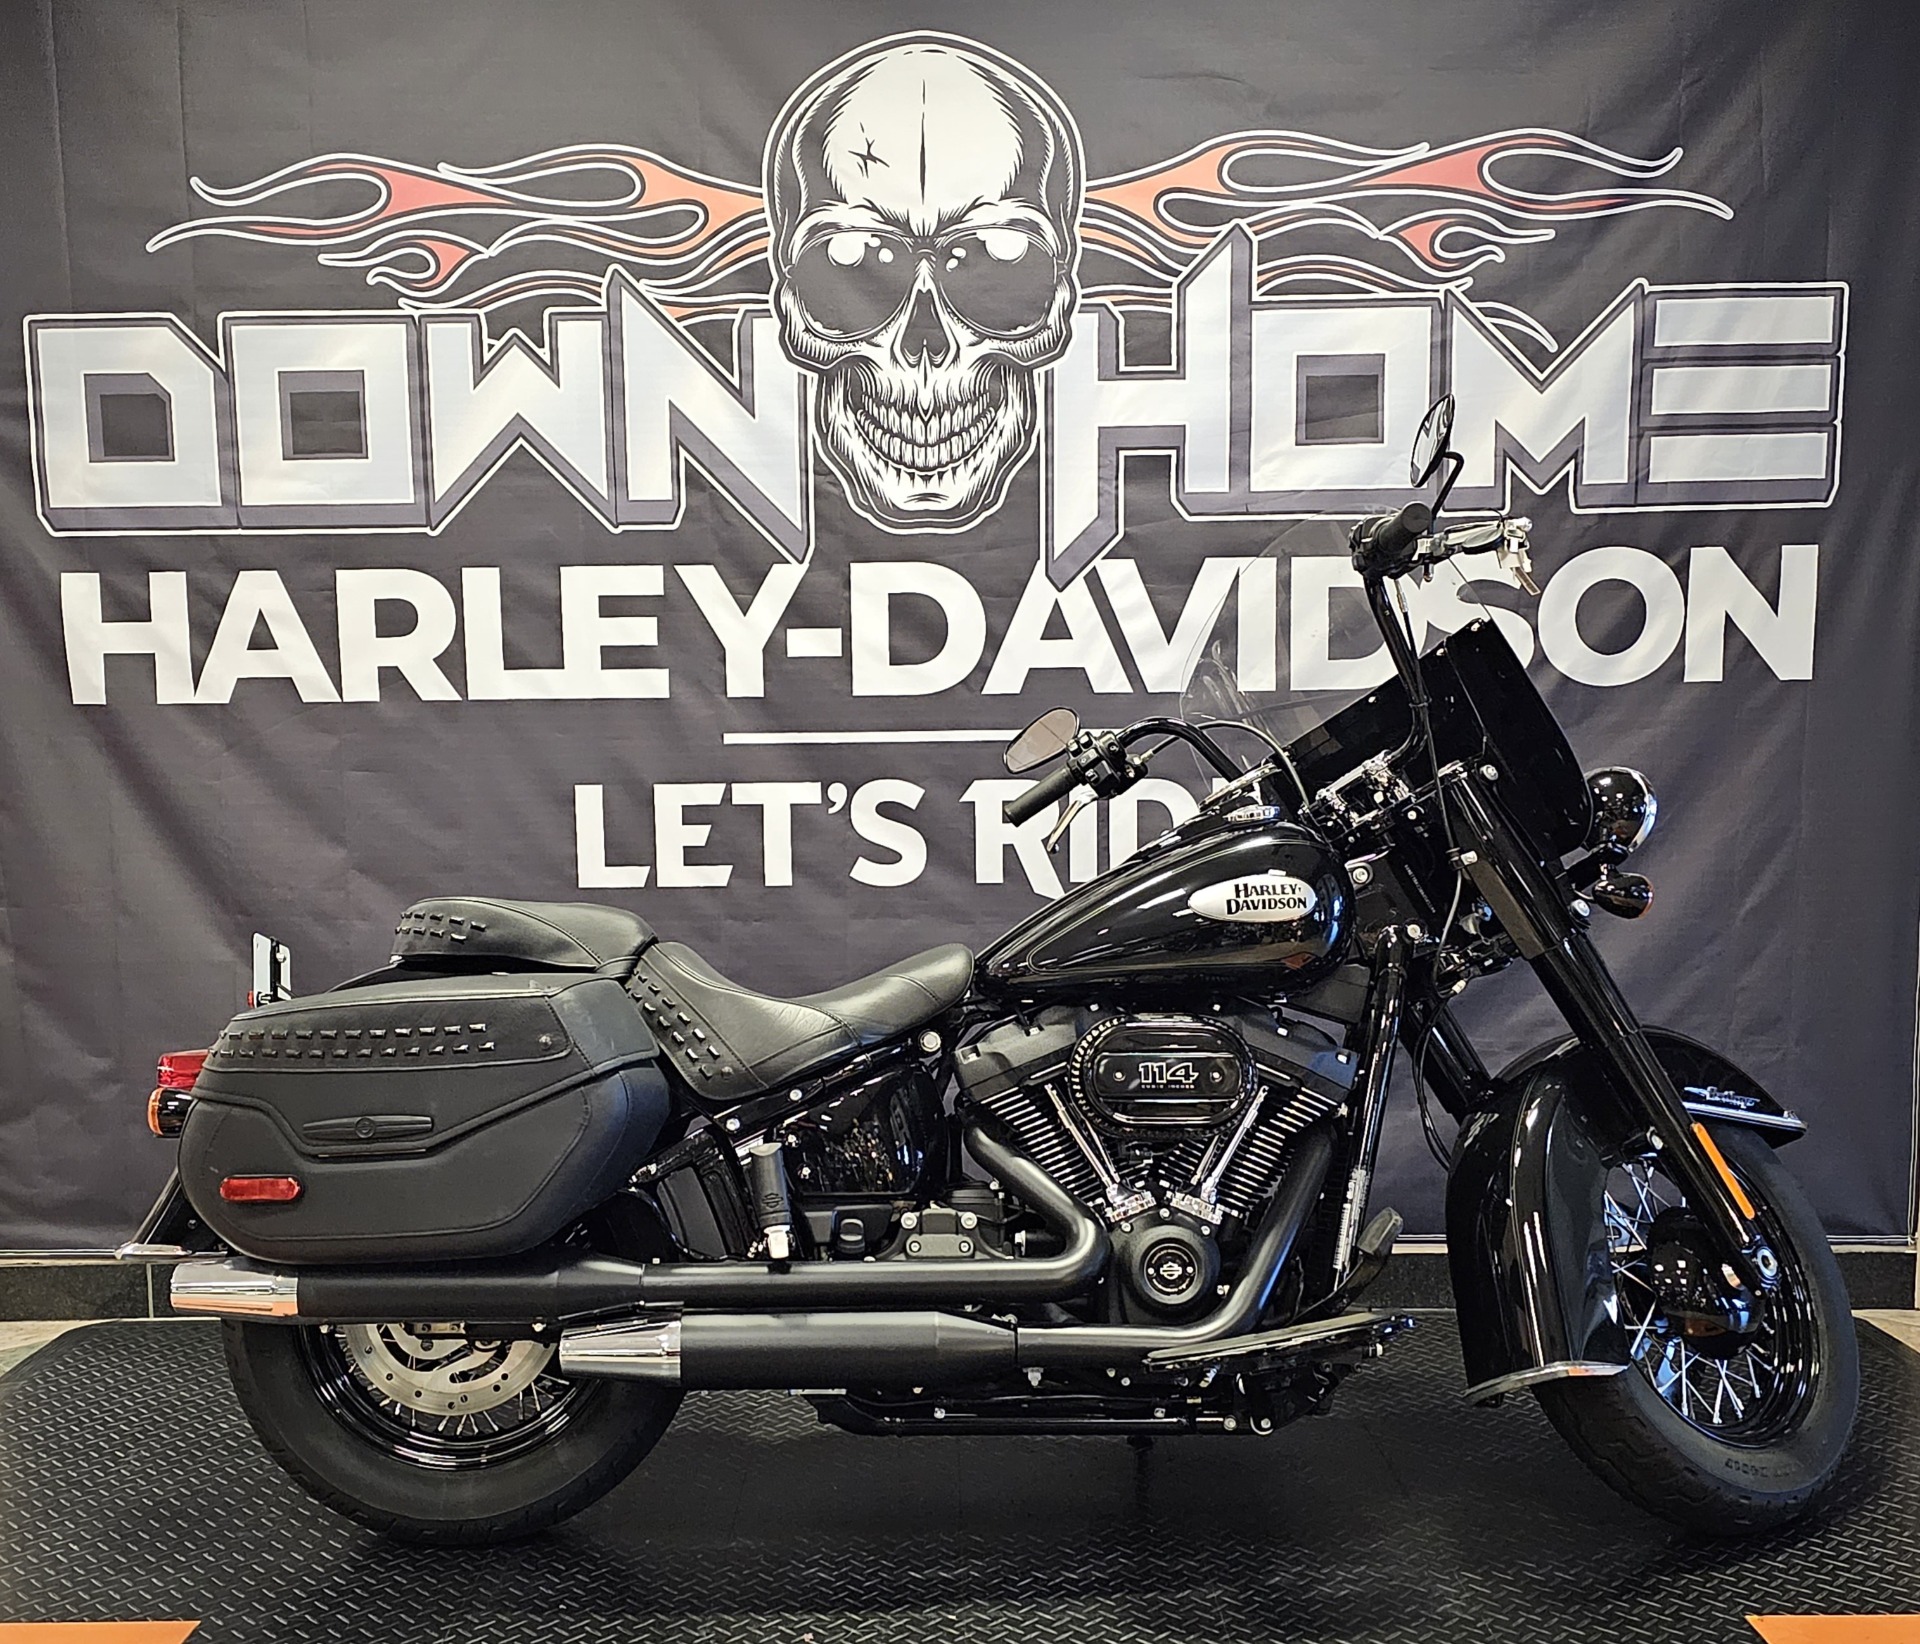 2022 Harley-Davidson Heritage Classic 114 in Burlington, North Carolina - Photo 2